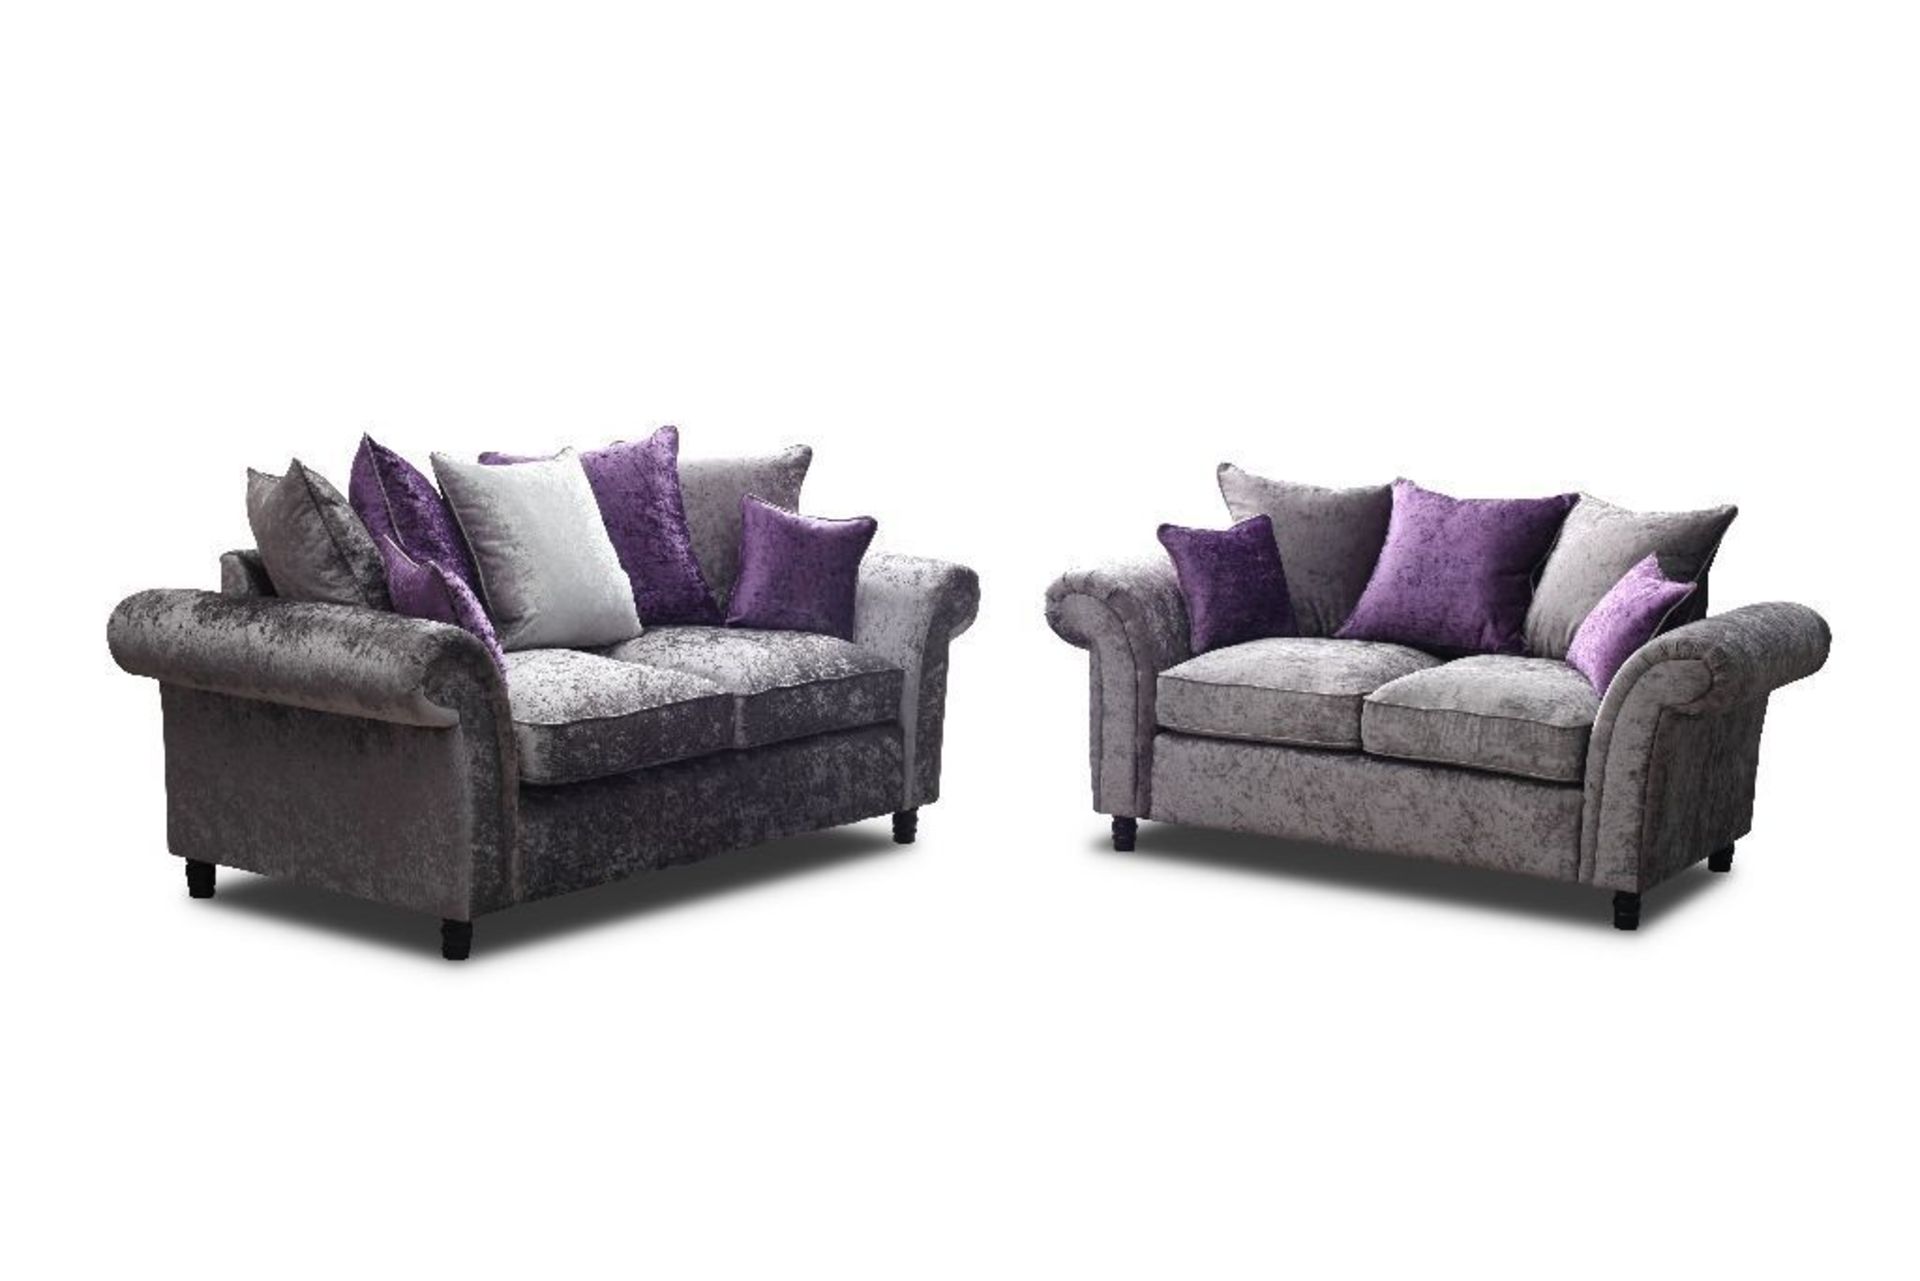 Scarpa deluxe 3 seater sofa in silver shimmer crushed velvet plus scarpa 2 seater sofa